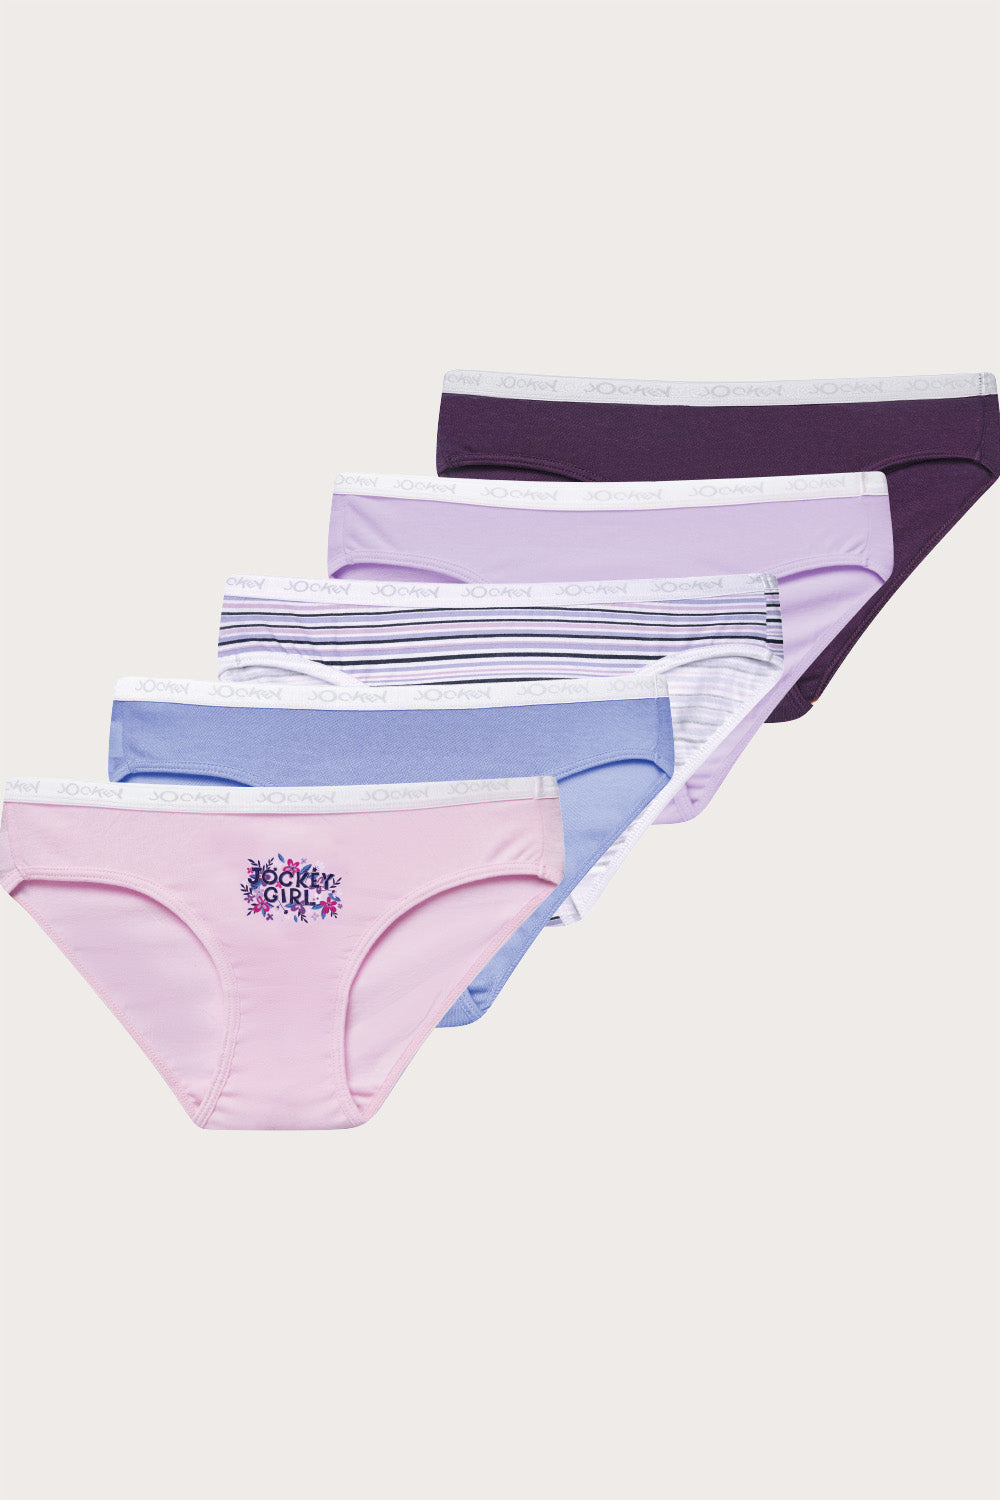 JOCKEY Girls Printed Panties - Pack of 5 Pcs.